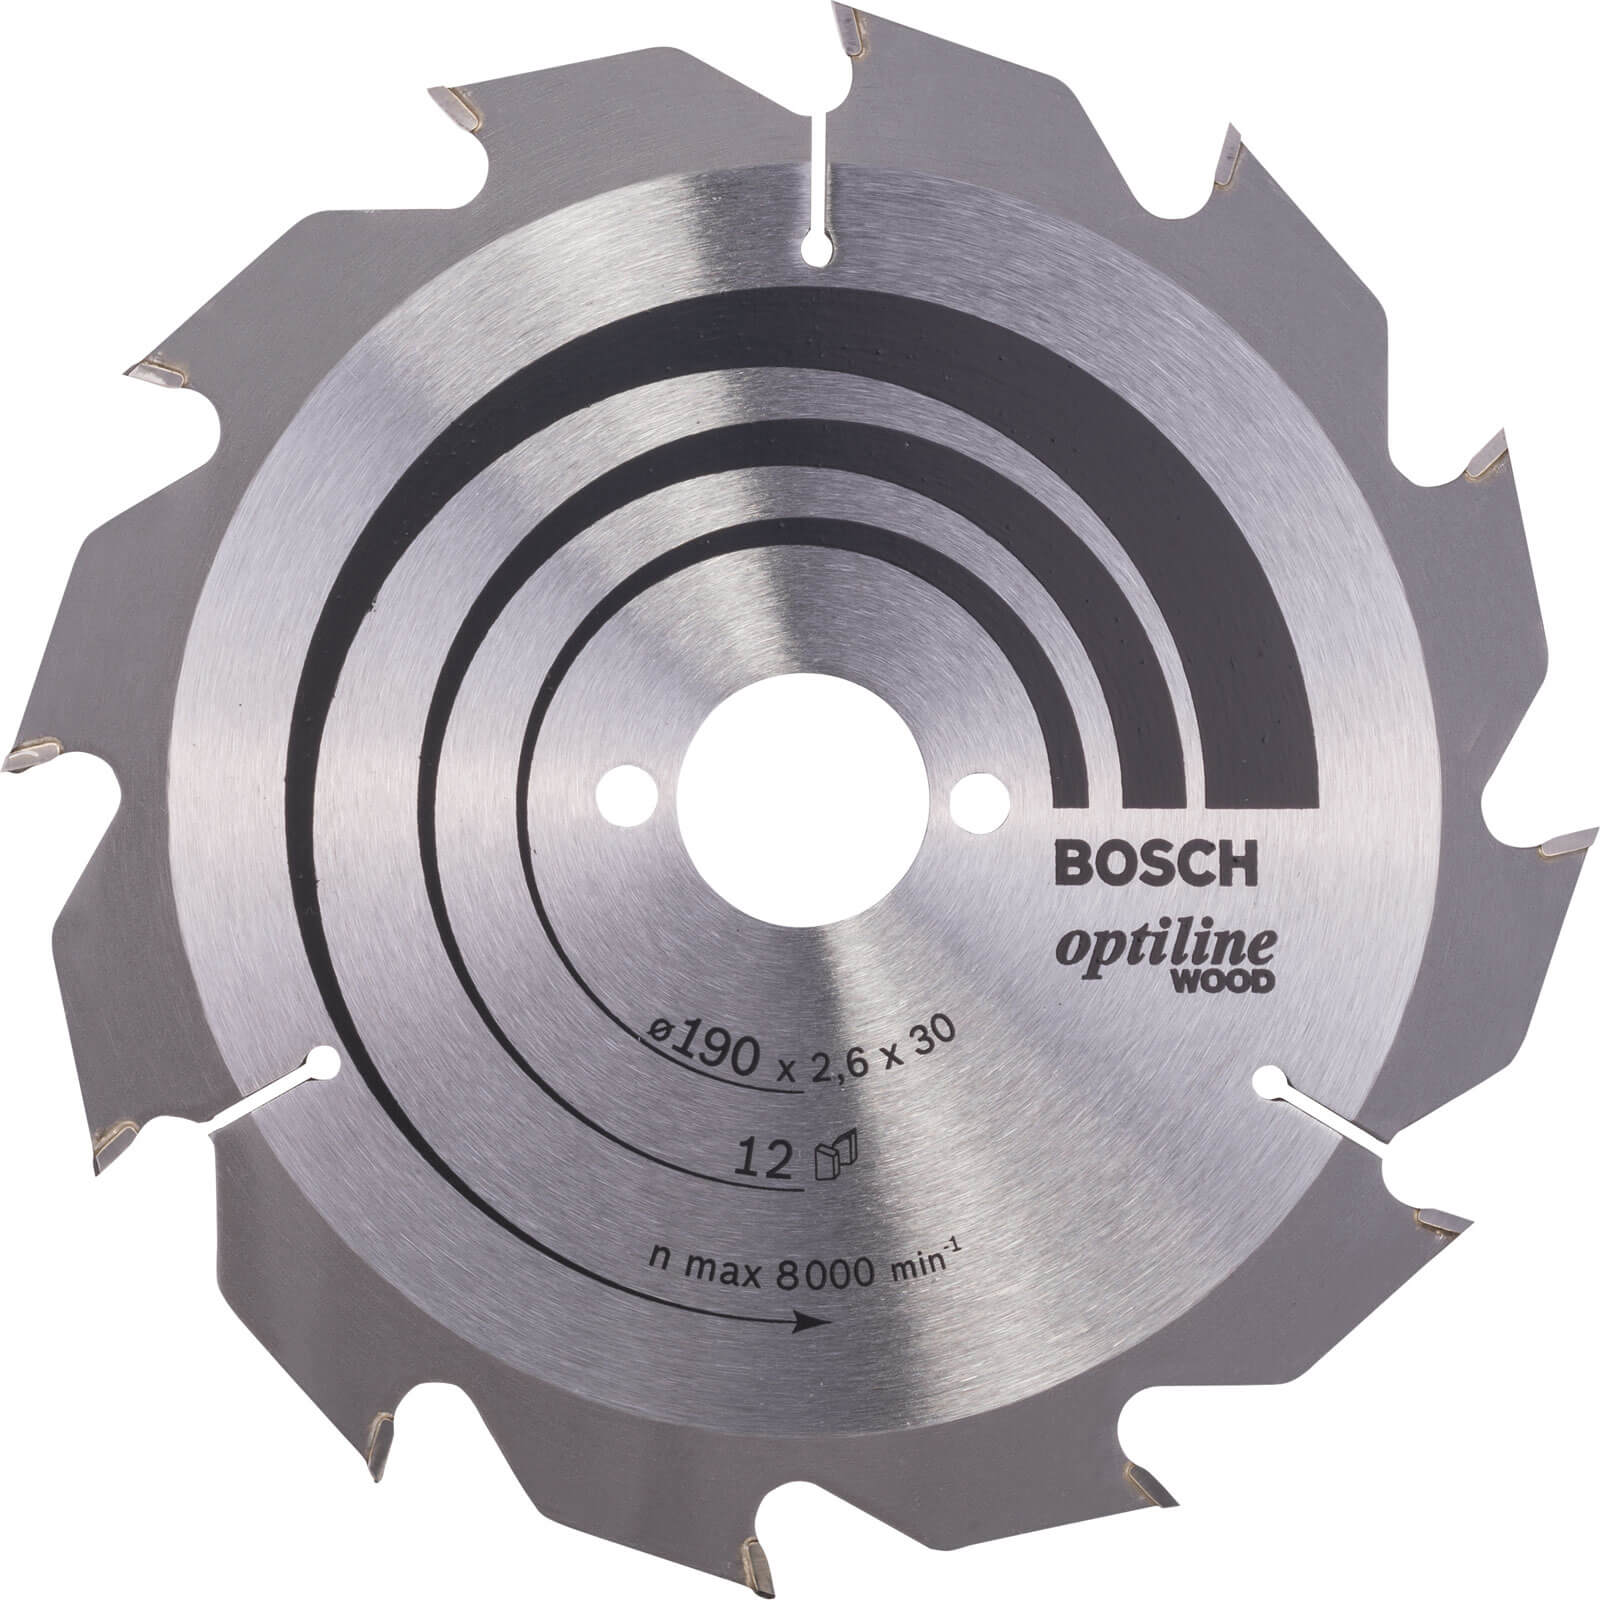 Image of Bosch Optiline Wood Cutting Saw Blade 190mm 12T 30mm